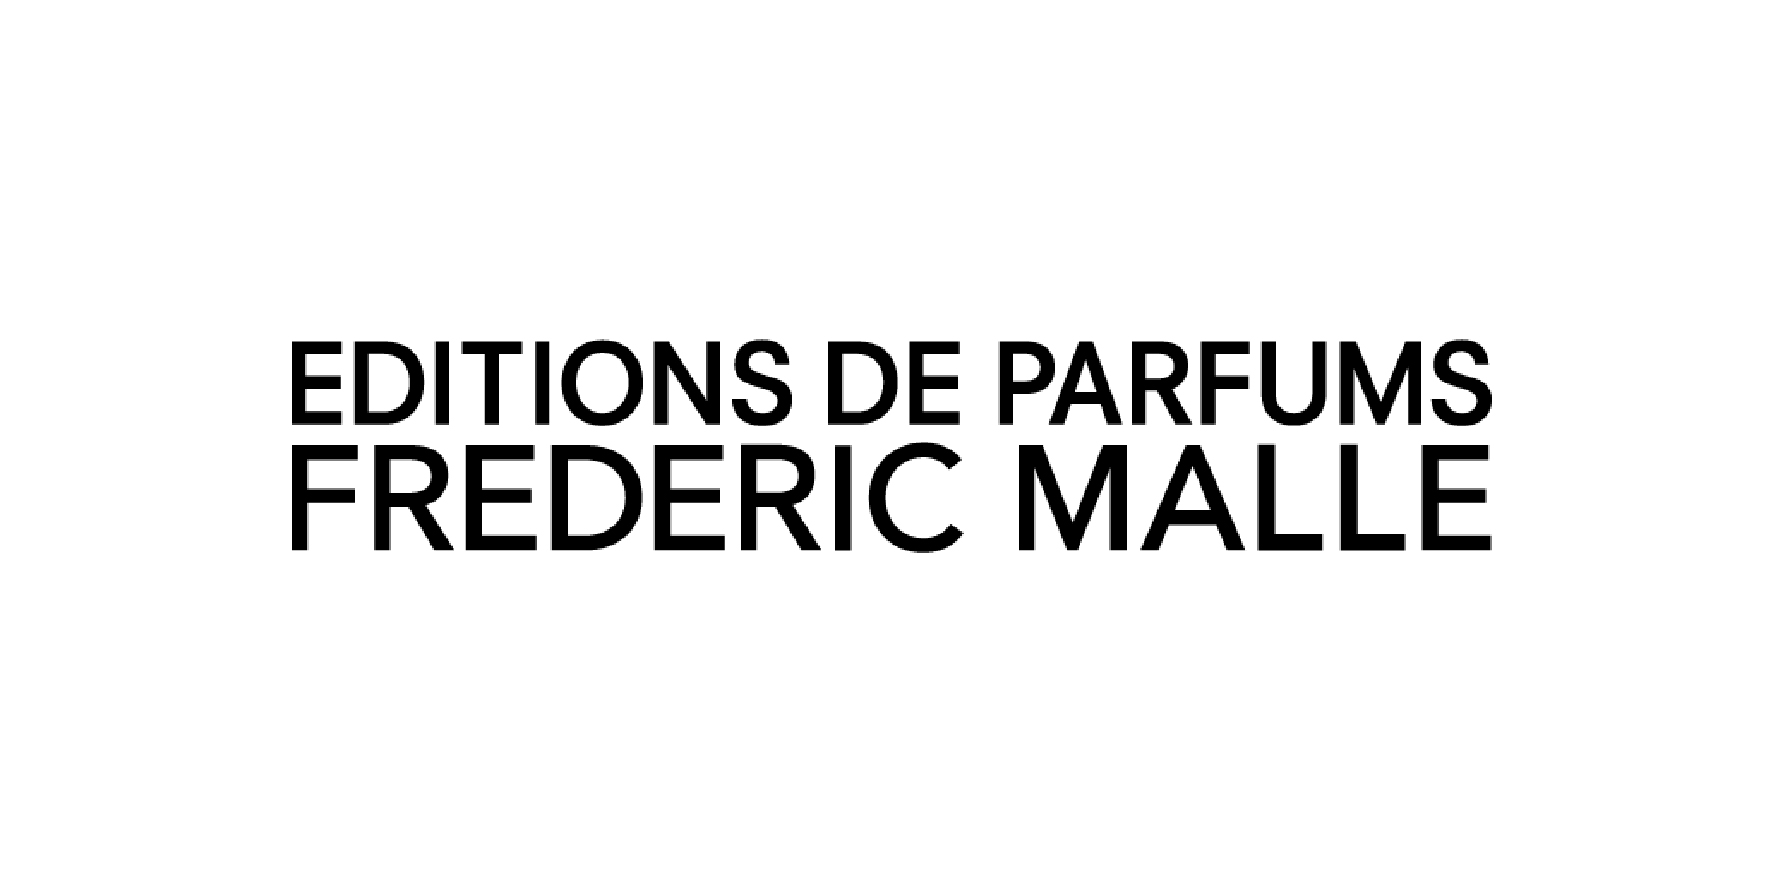 EDP Federic Malle